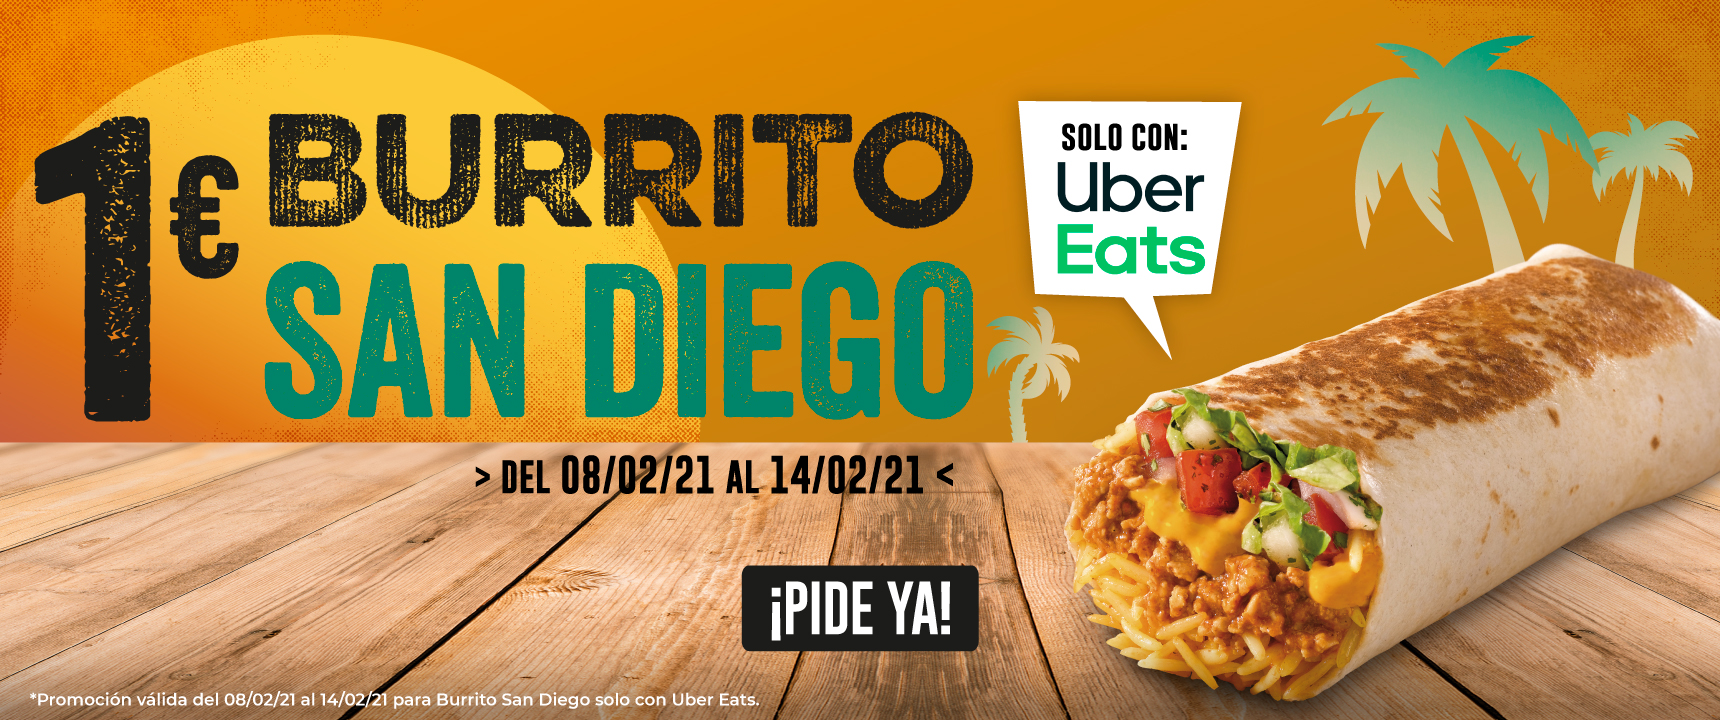 Burrito San Diego por 1€ en Taco Bell con Uber Eats